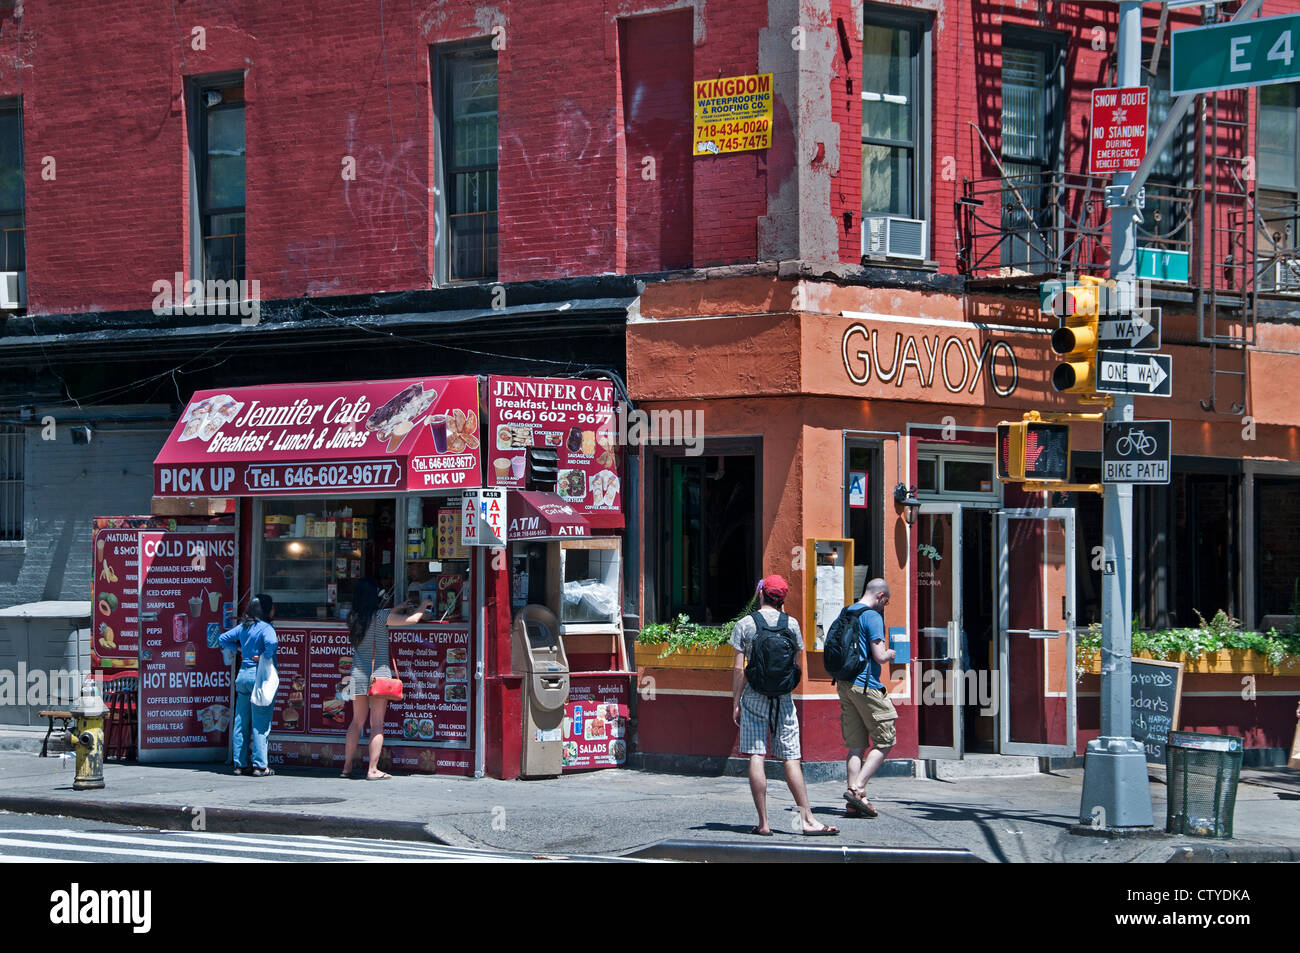 Jennifer cafe pick up fast food 1° Avenue West Village ( Greenwich ) Manhattan New York Stati Uniti d'America Foto Stock